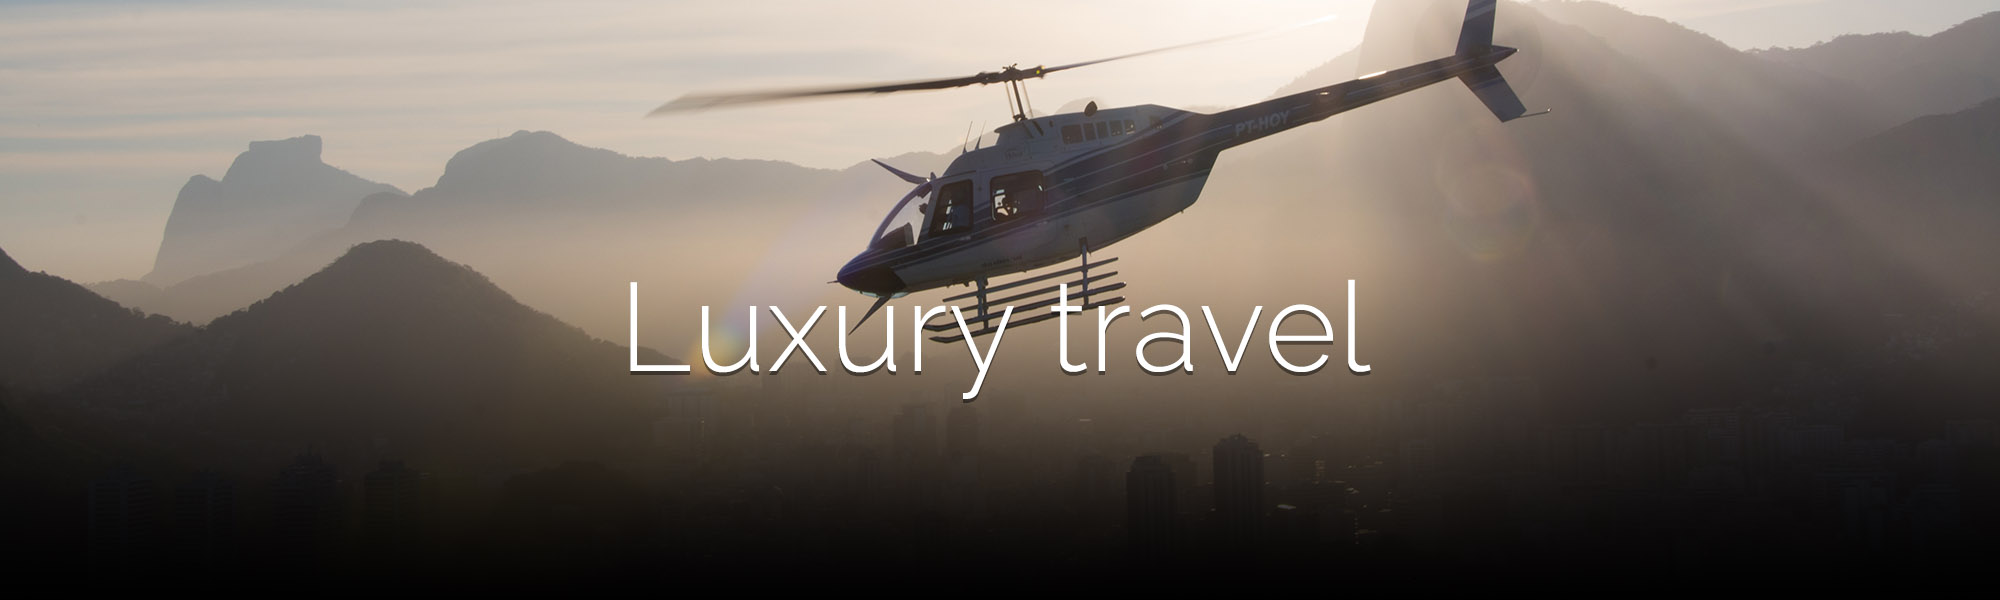 luxury travel stats